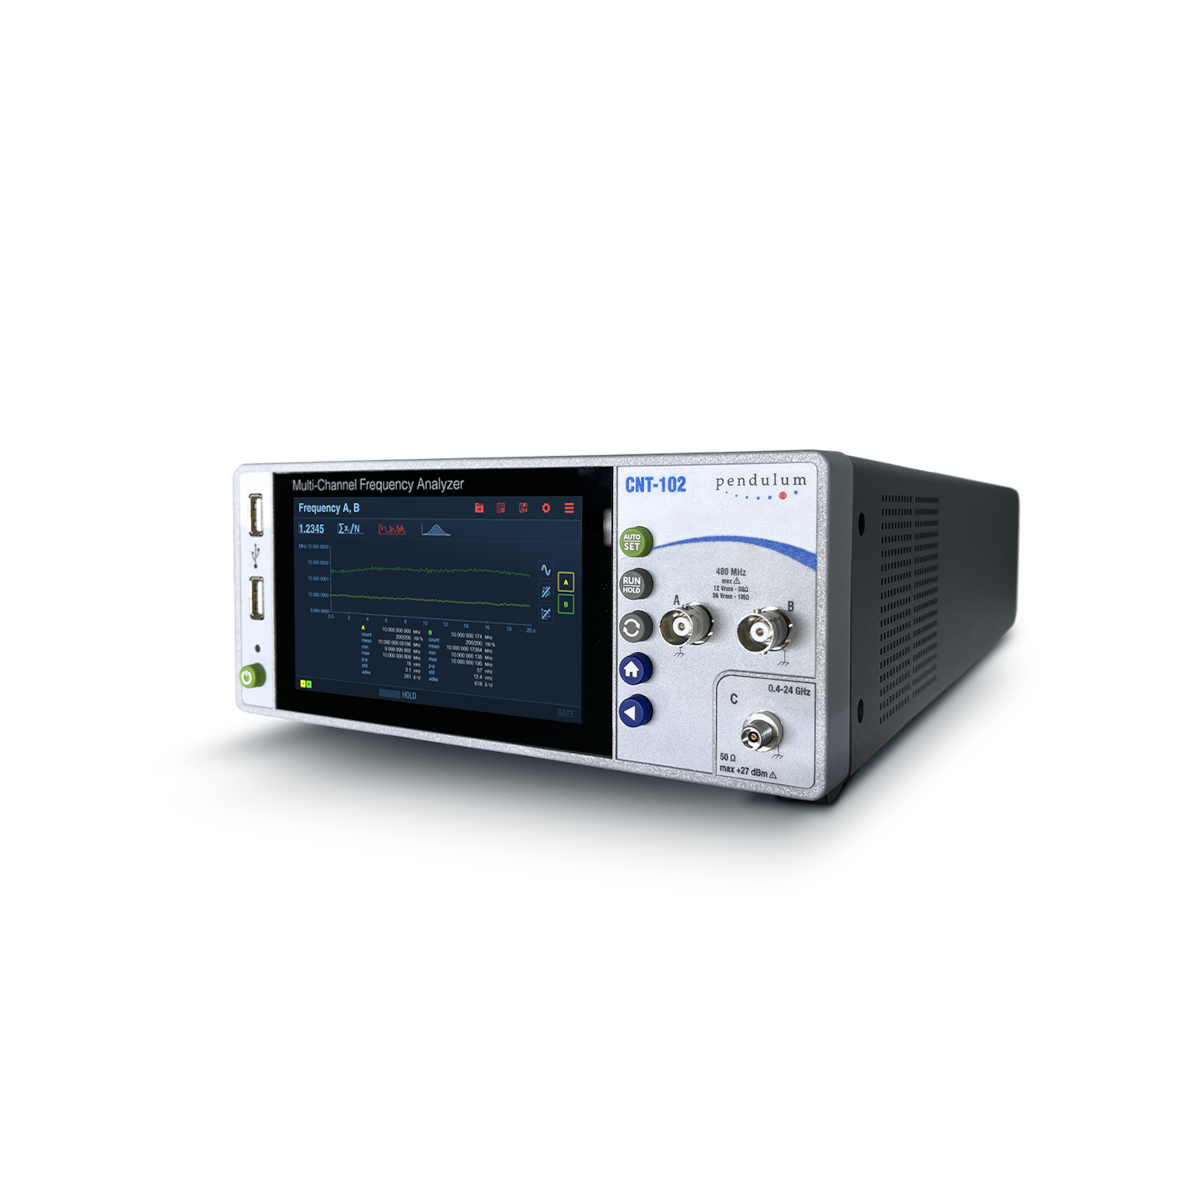 Pendulum CNT-102 Multi-Channel Frequency Analyzer